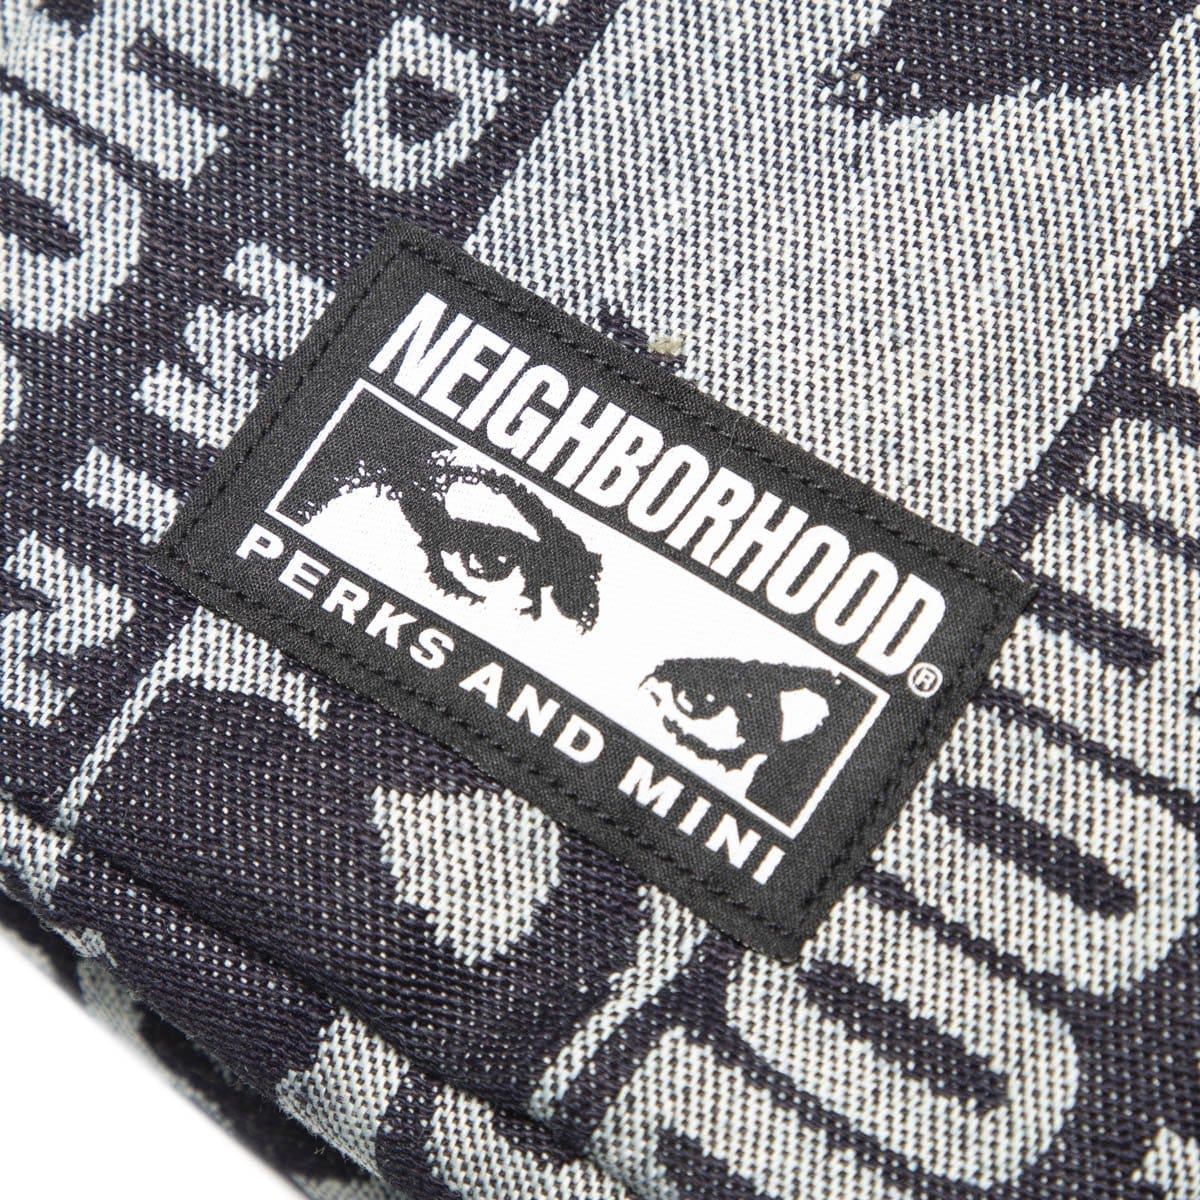 Neighborhood Bags & Accessories INDIGO / OS / 192TQPMN-CG01S x Perks and Mini NHPM / C-LUGGAGE